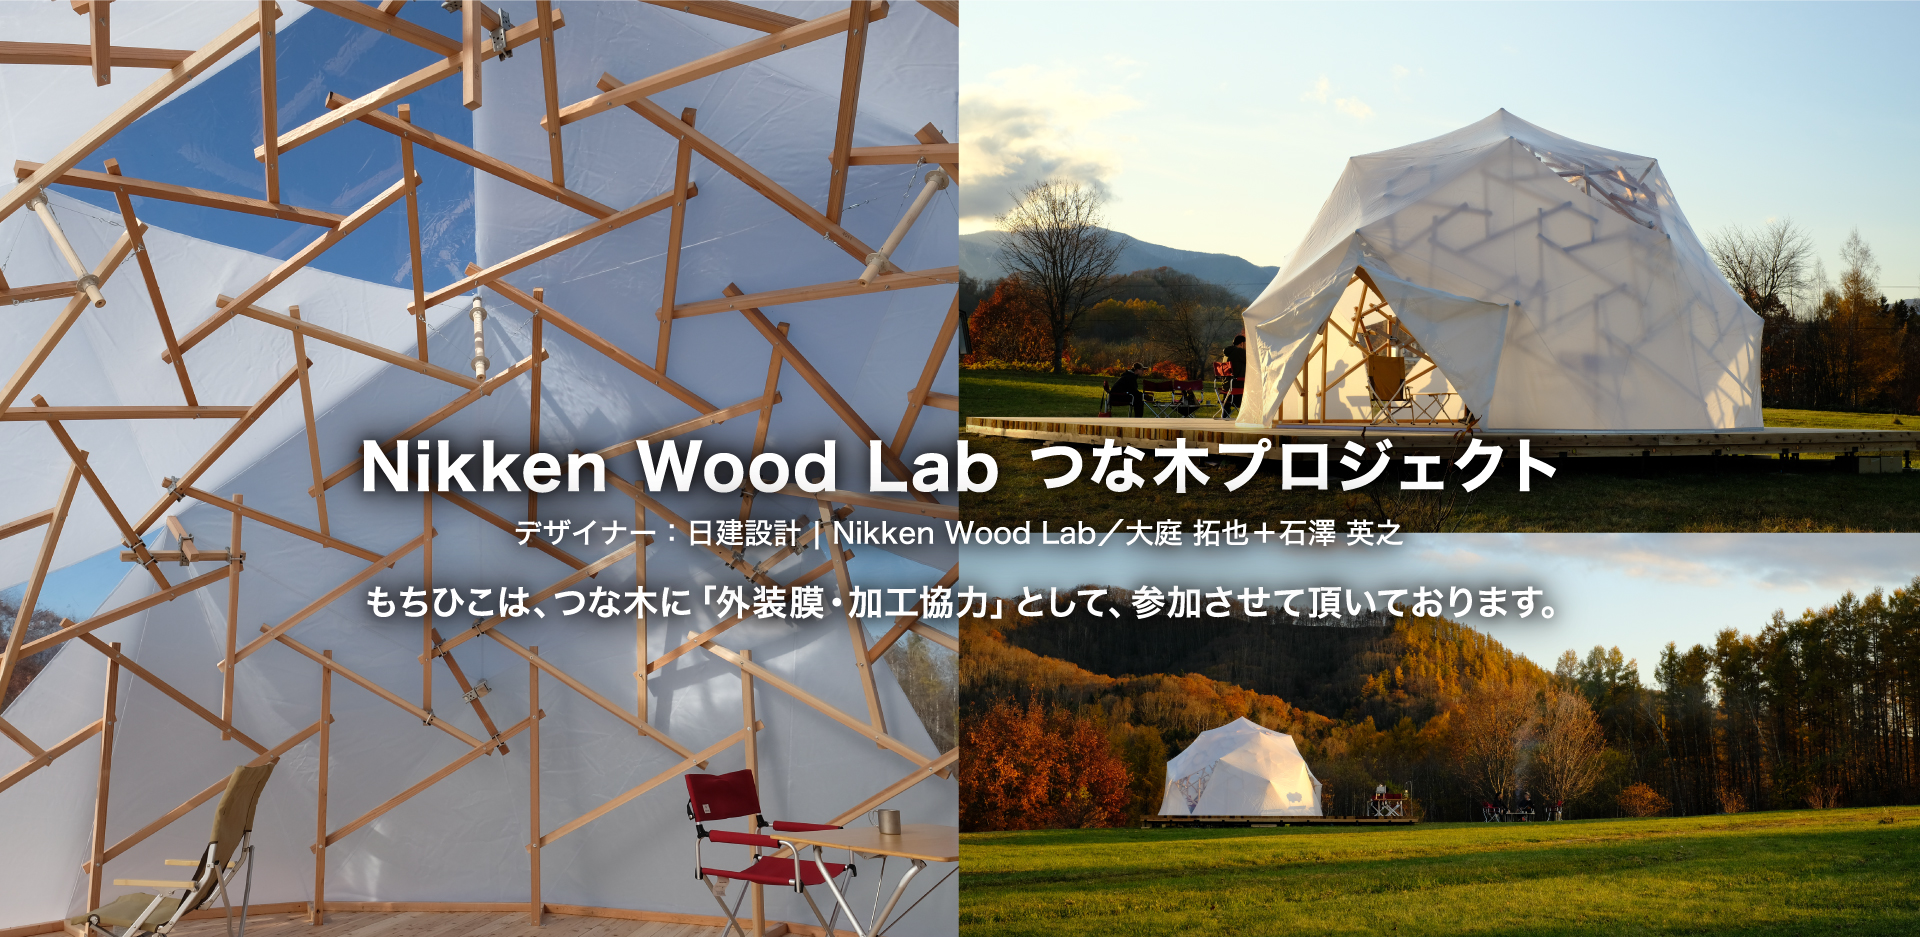 Nikken Wood Lab つな木プロジェクト　外装膜・加工協力として参加させて頂いております。